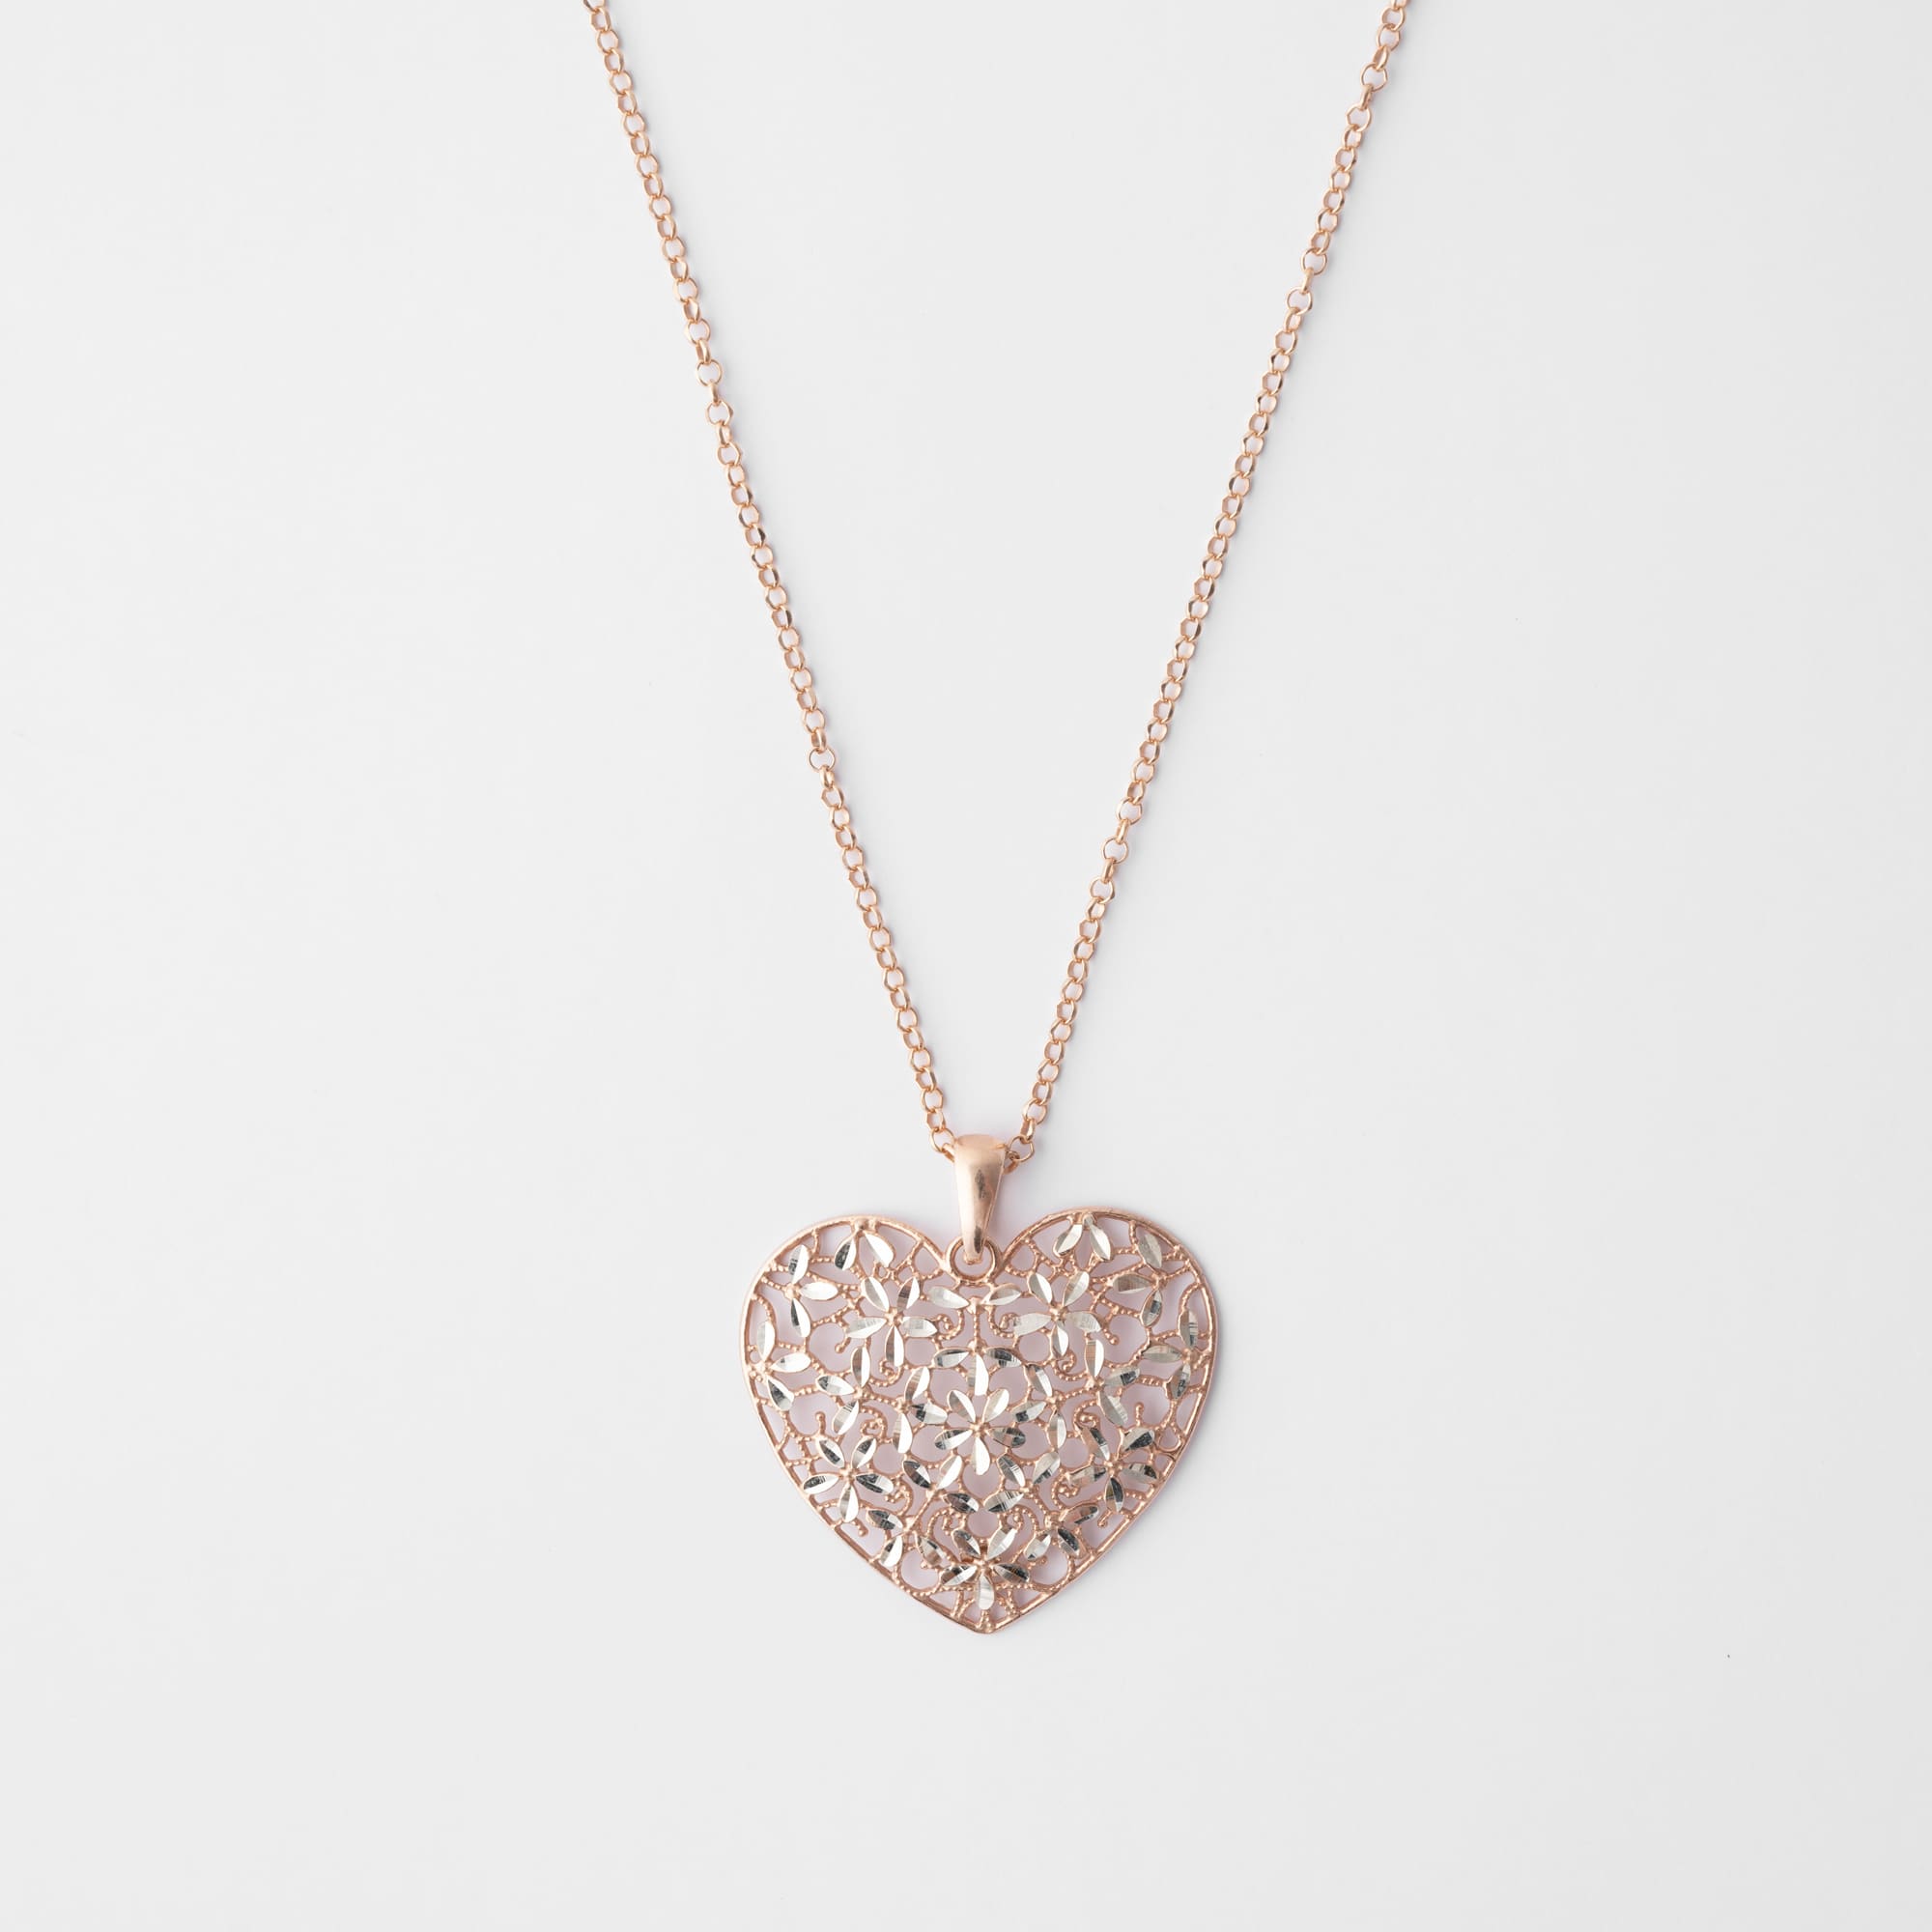 Filigree heart necklace